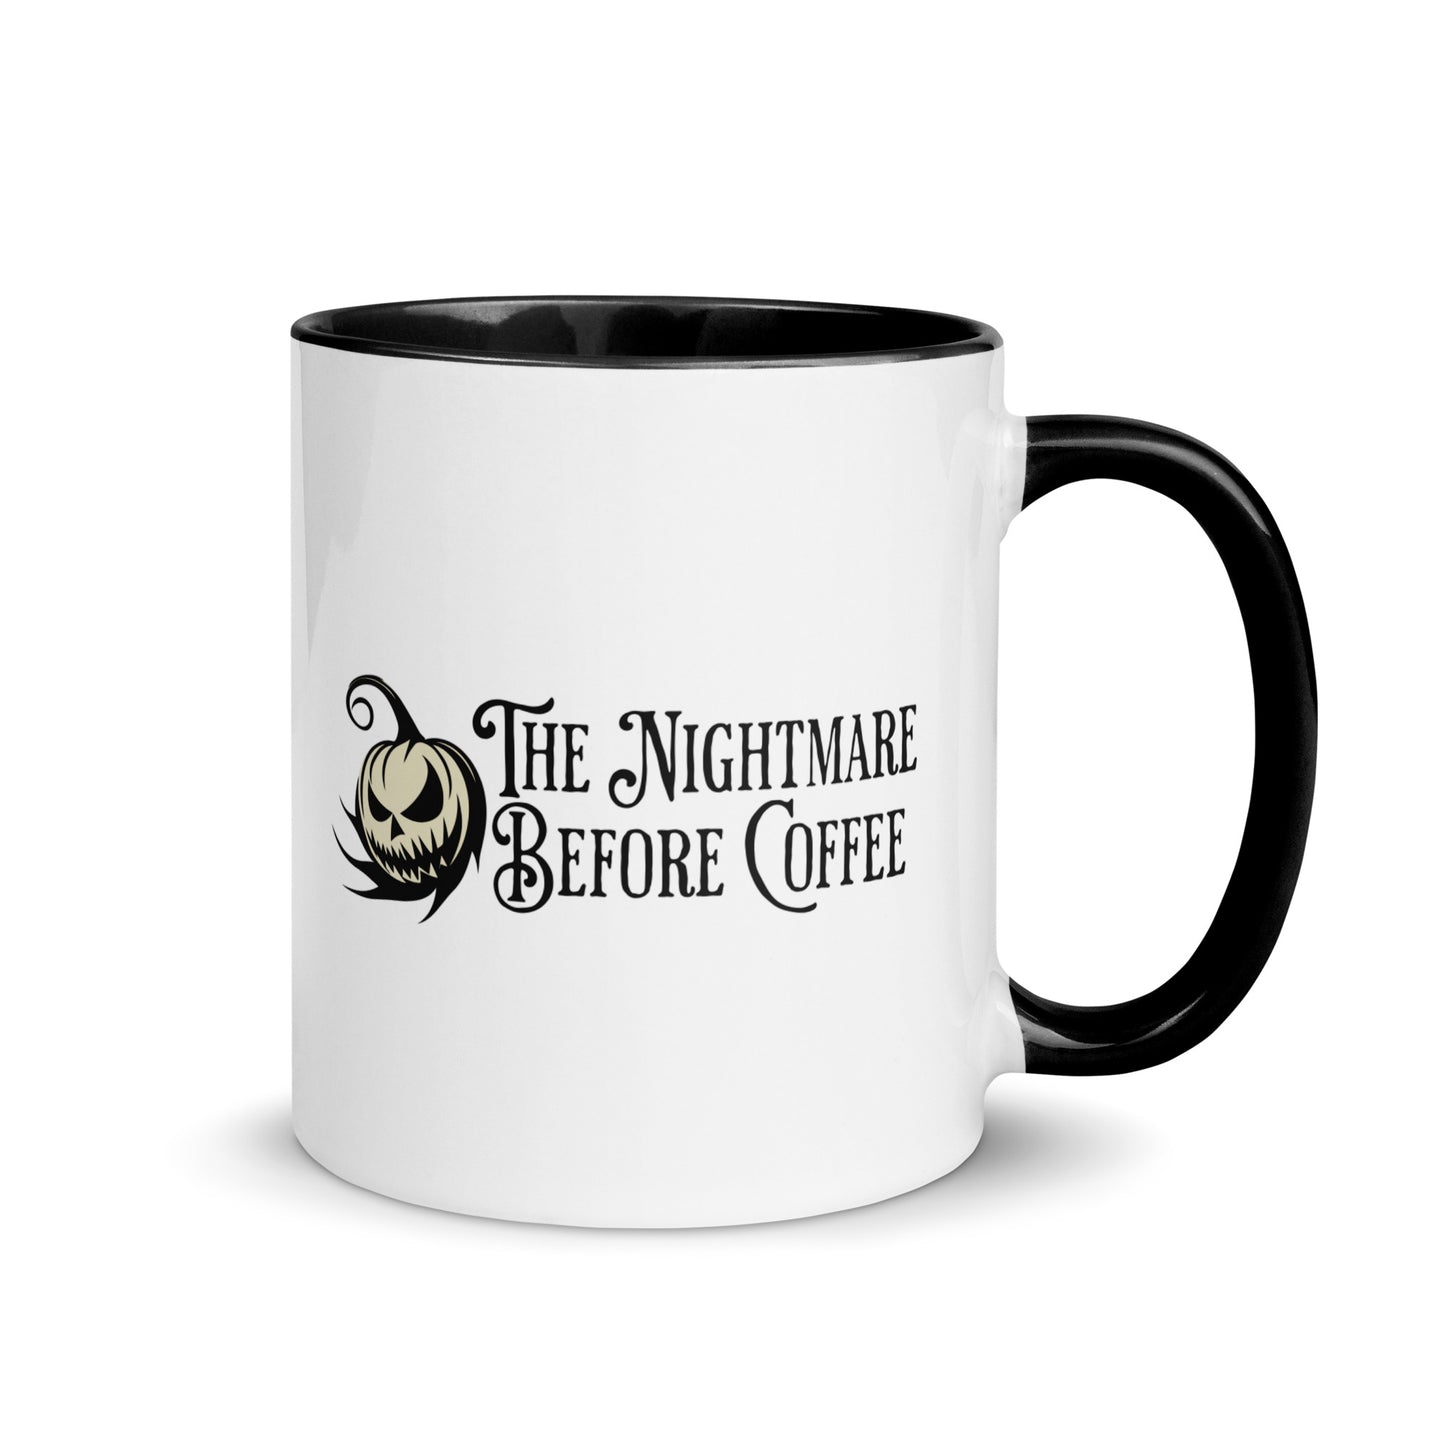 The Nightmare Before Coffee Mug